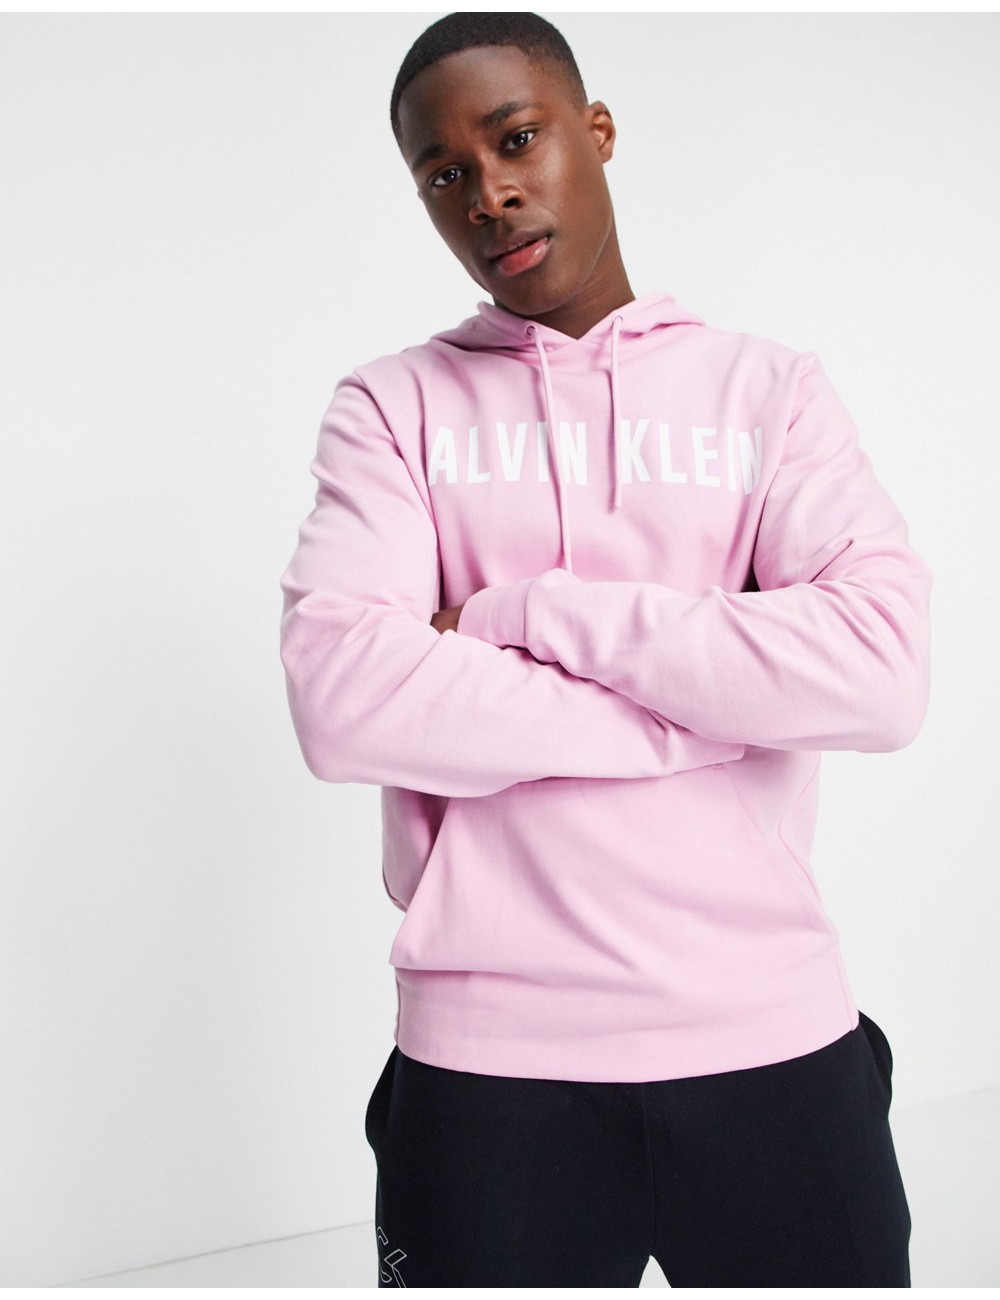 Calvin Klein Sport hoodie